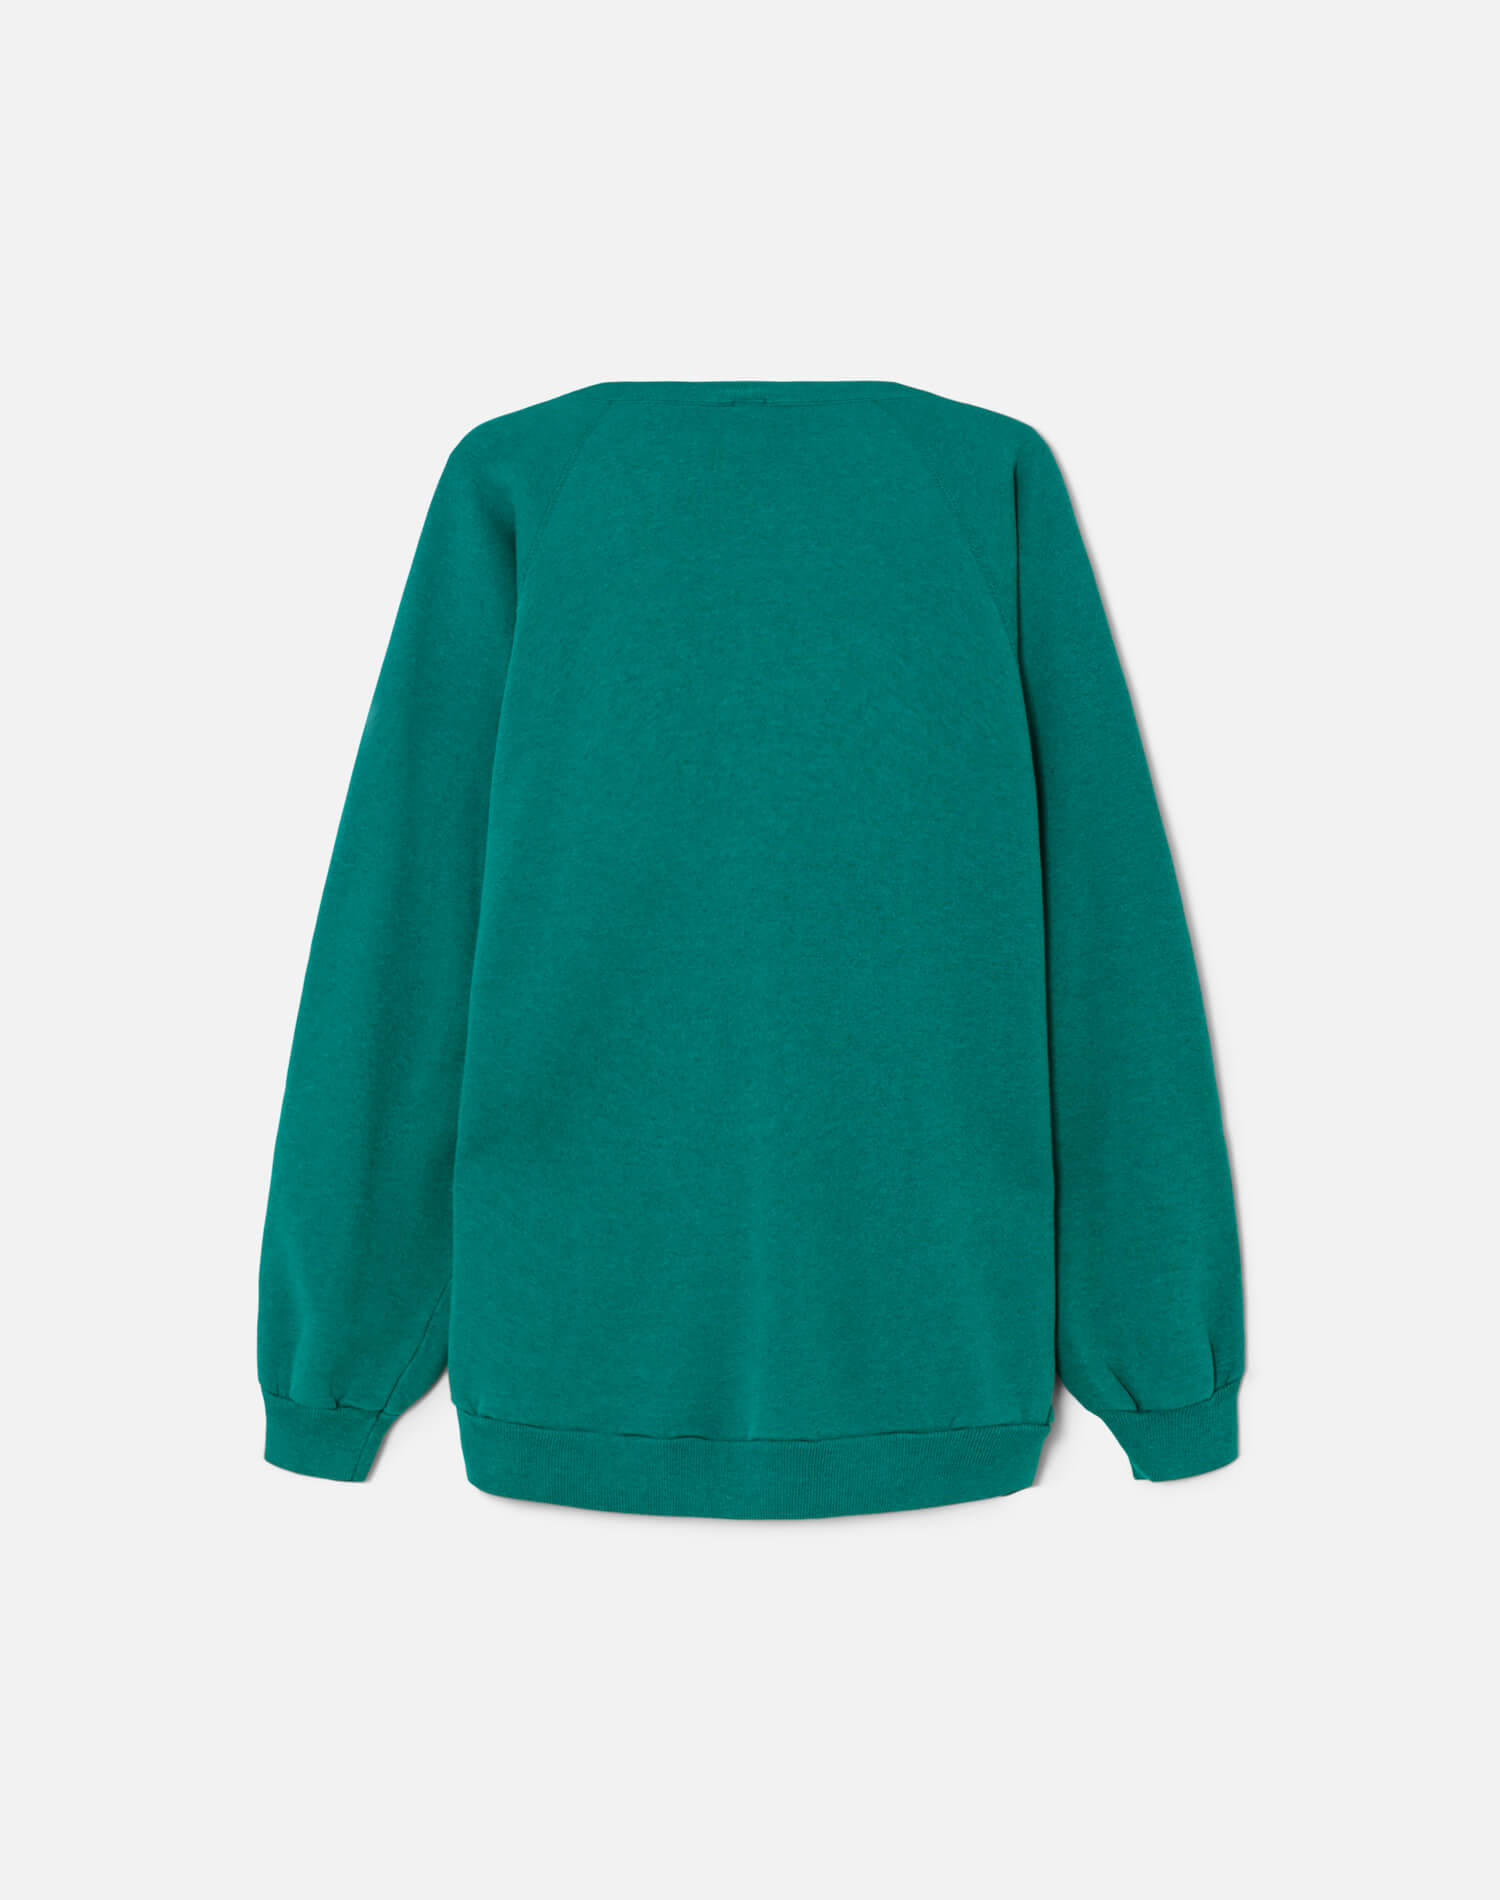 Upcycled "Popeye Idea" Sweatshirt - Green